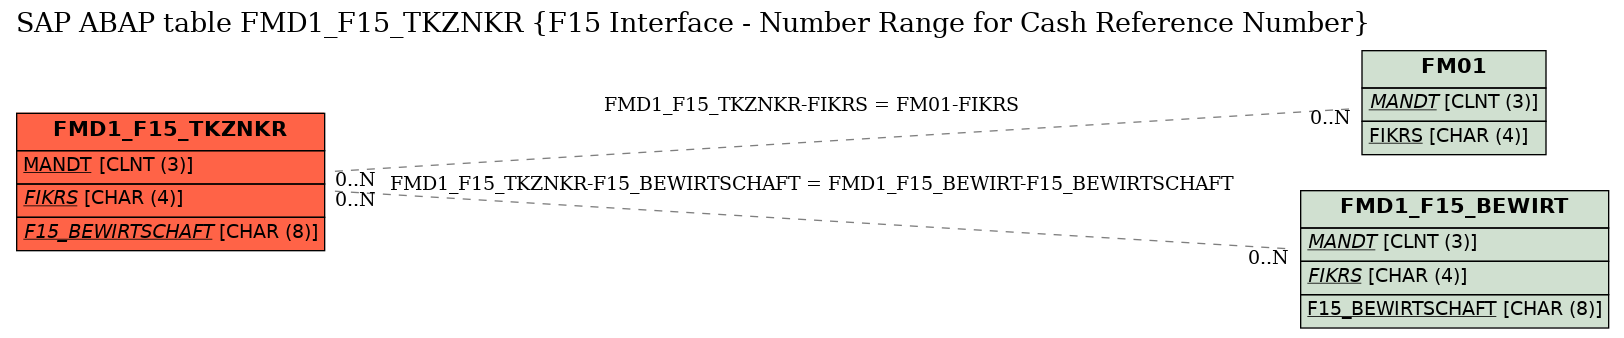 E-R Diagram for table FMD1_F15_TKZNKR (F15 Interface - Number Range for Cash Reference Number)